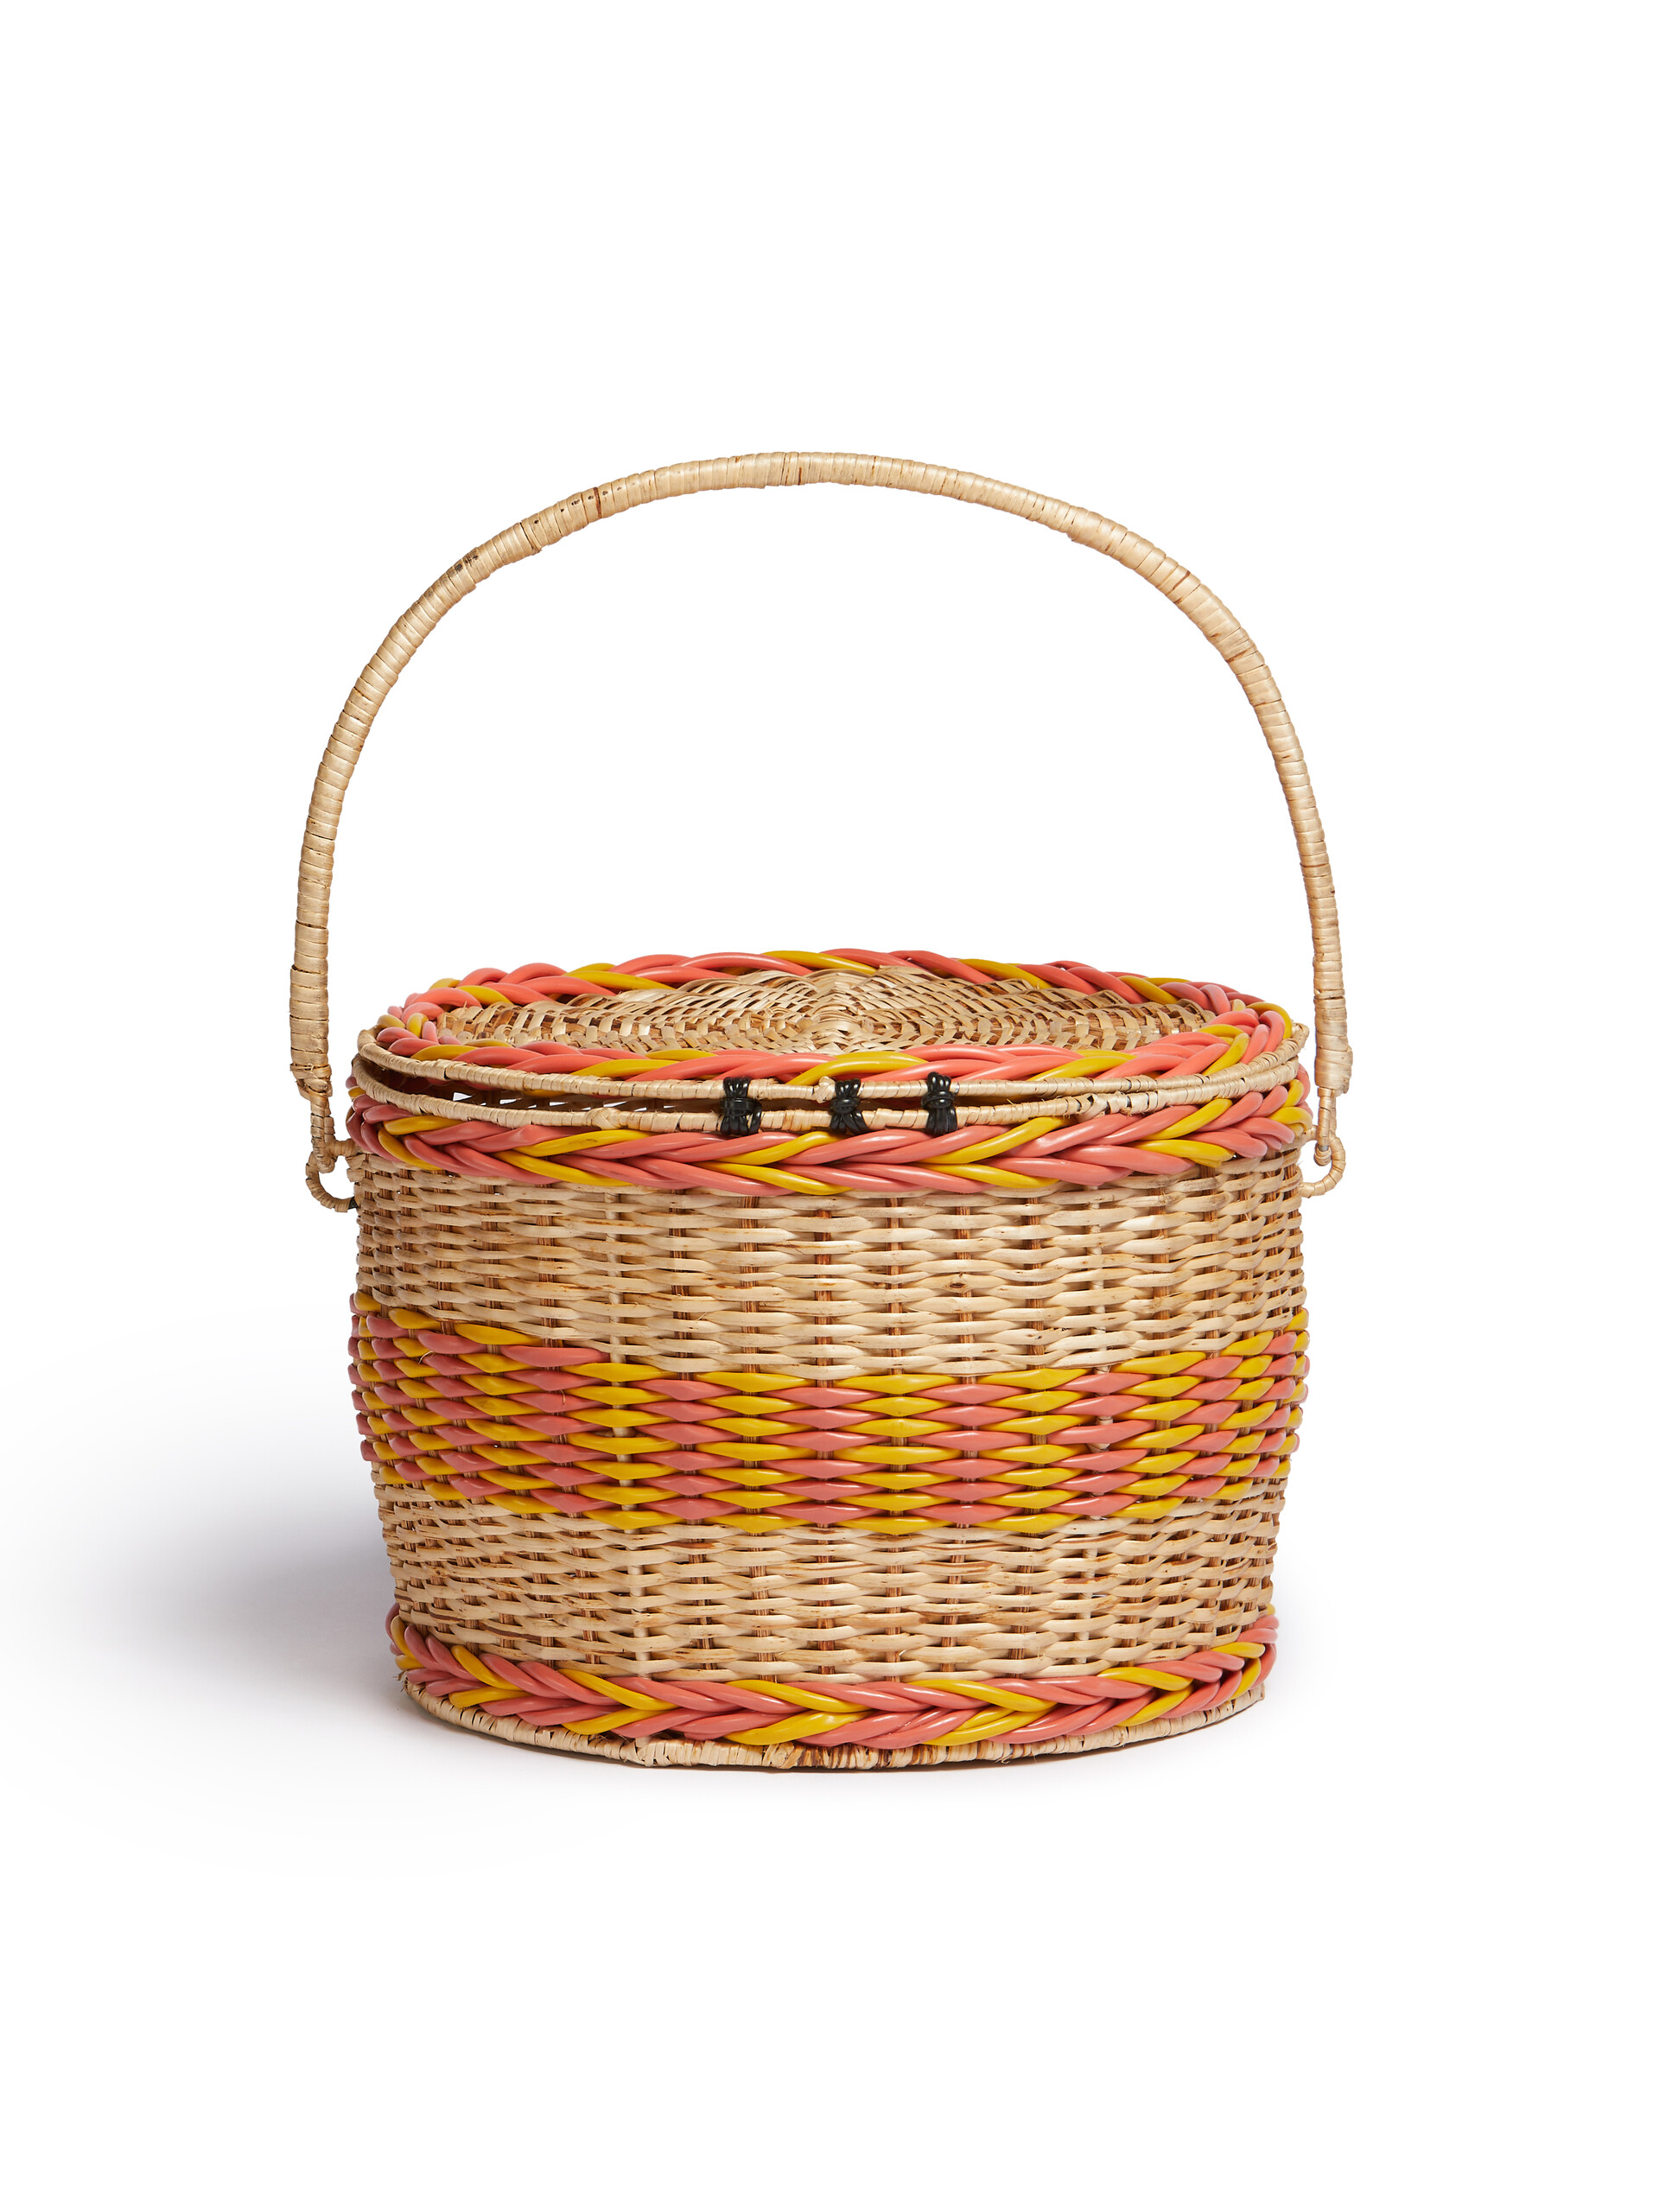 Orange natural fibre MARNI MARKET picnic basket - Accessories - Image 3